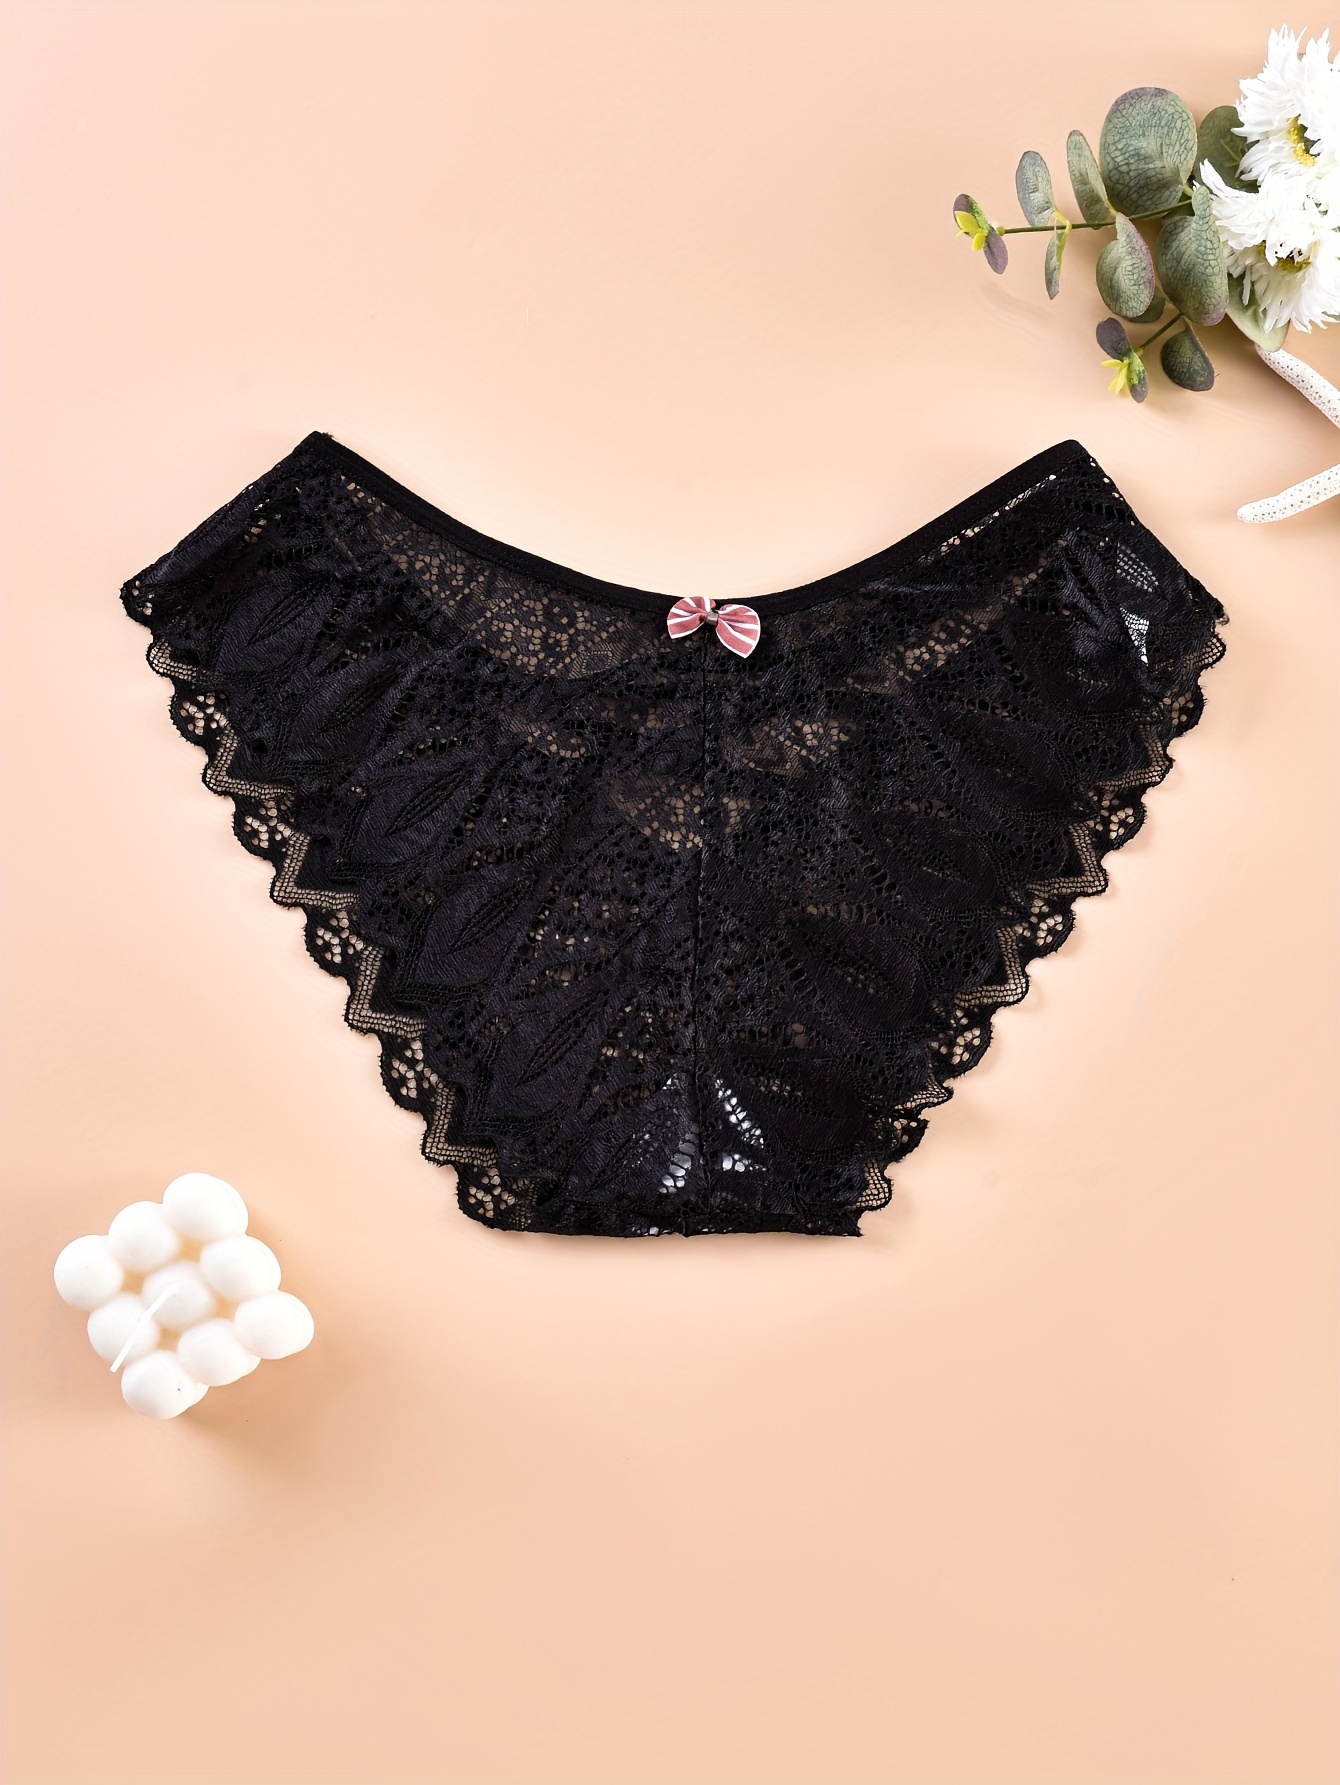 6ixty8ight Lace Cheeky Panty Ladies Underwear (Black, Tag M